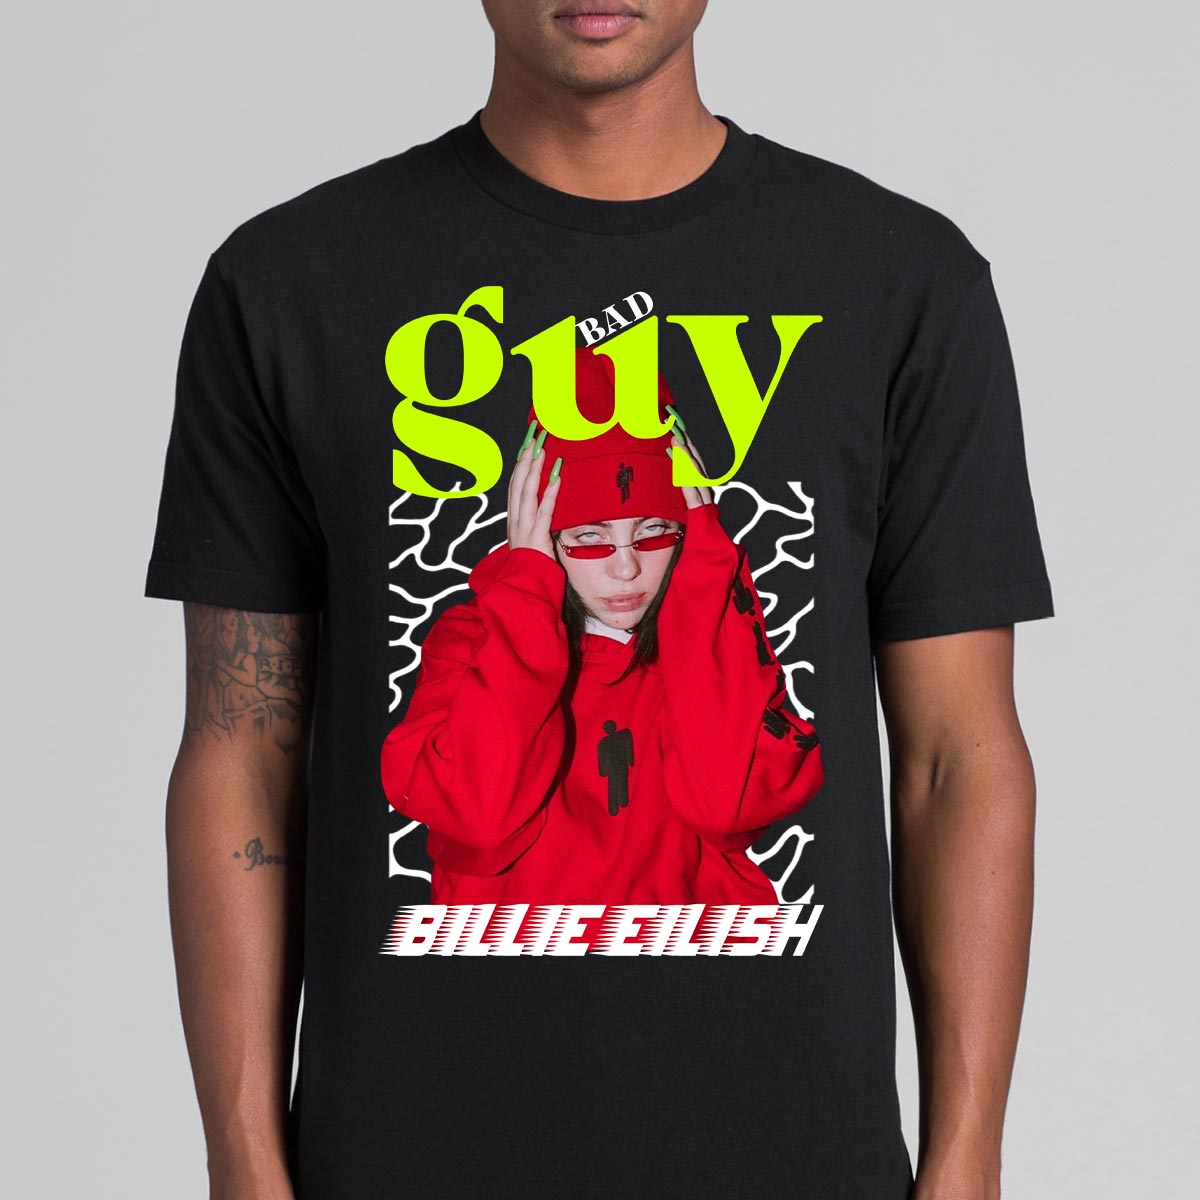 Billie Eilish Bad Guy T-Shirt Artist Family Fan Music Pop Culture